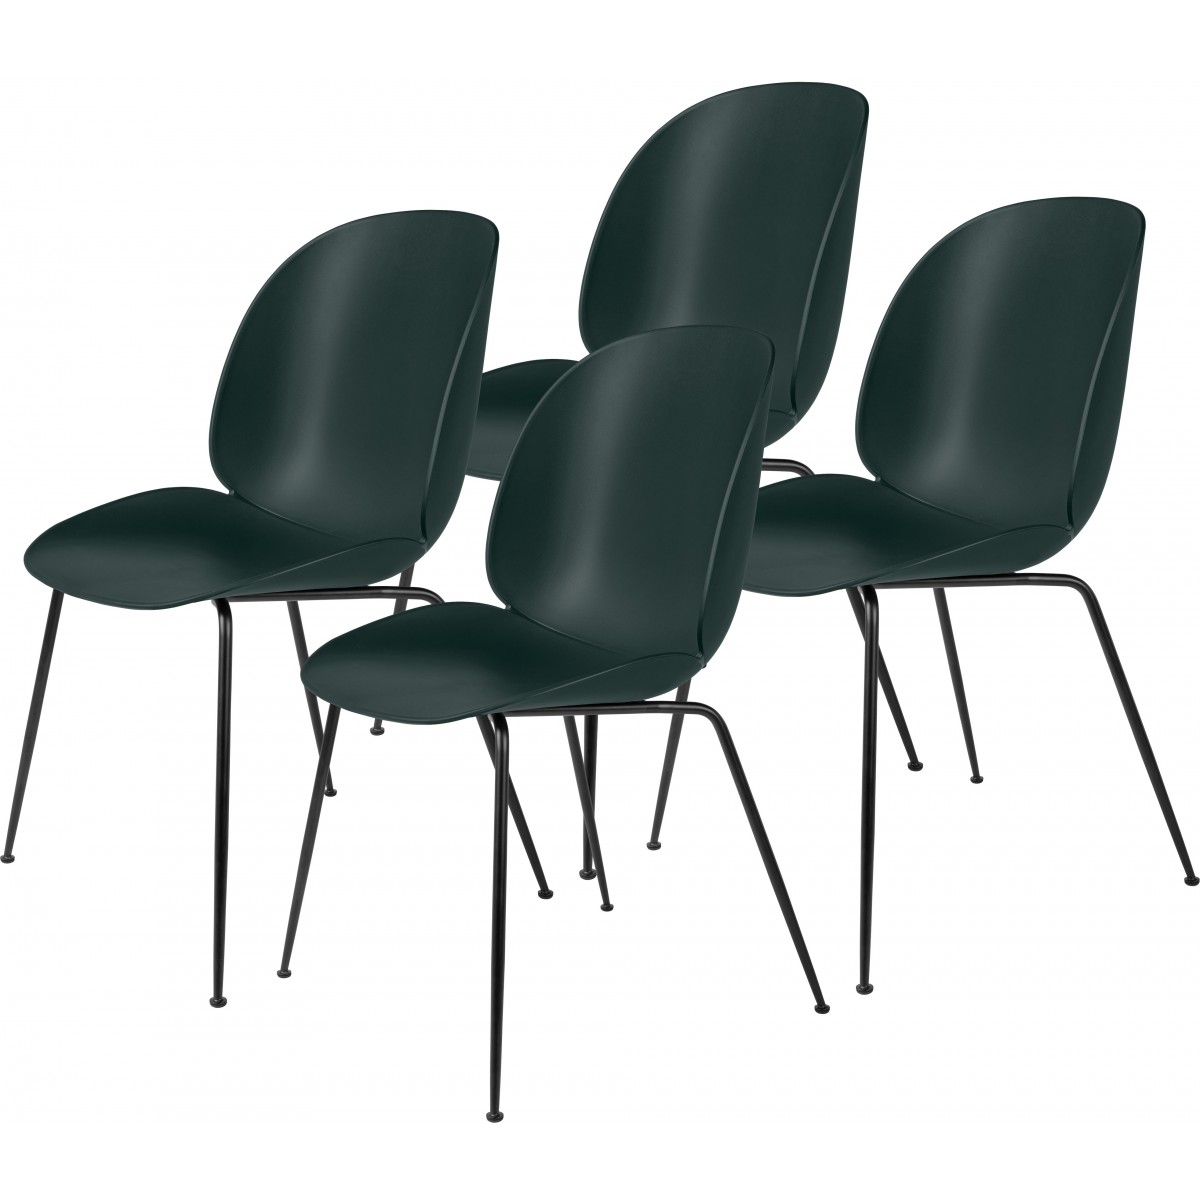 pack of 4 Beetle plastic chairs - dark green shell - metal legs